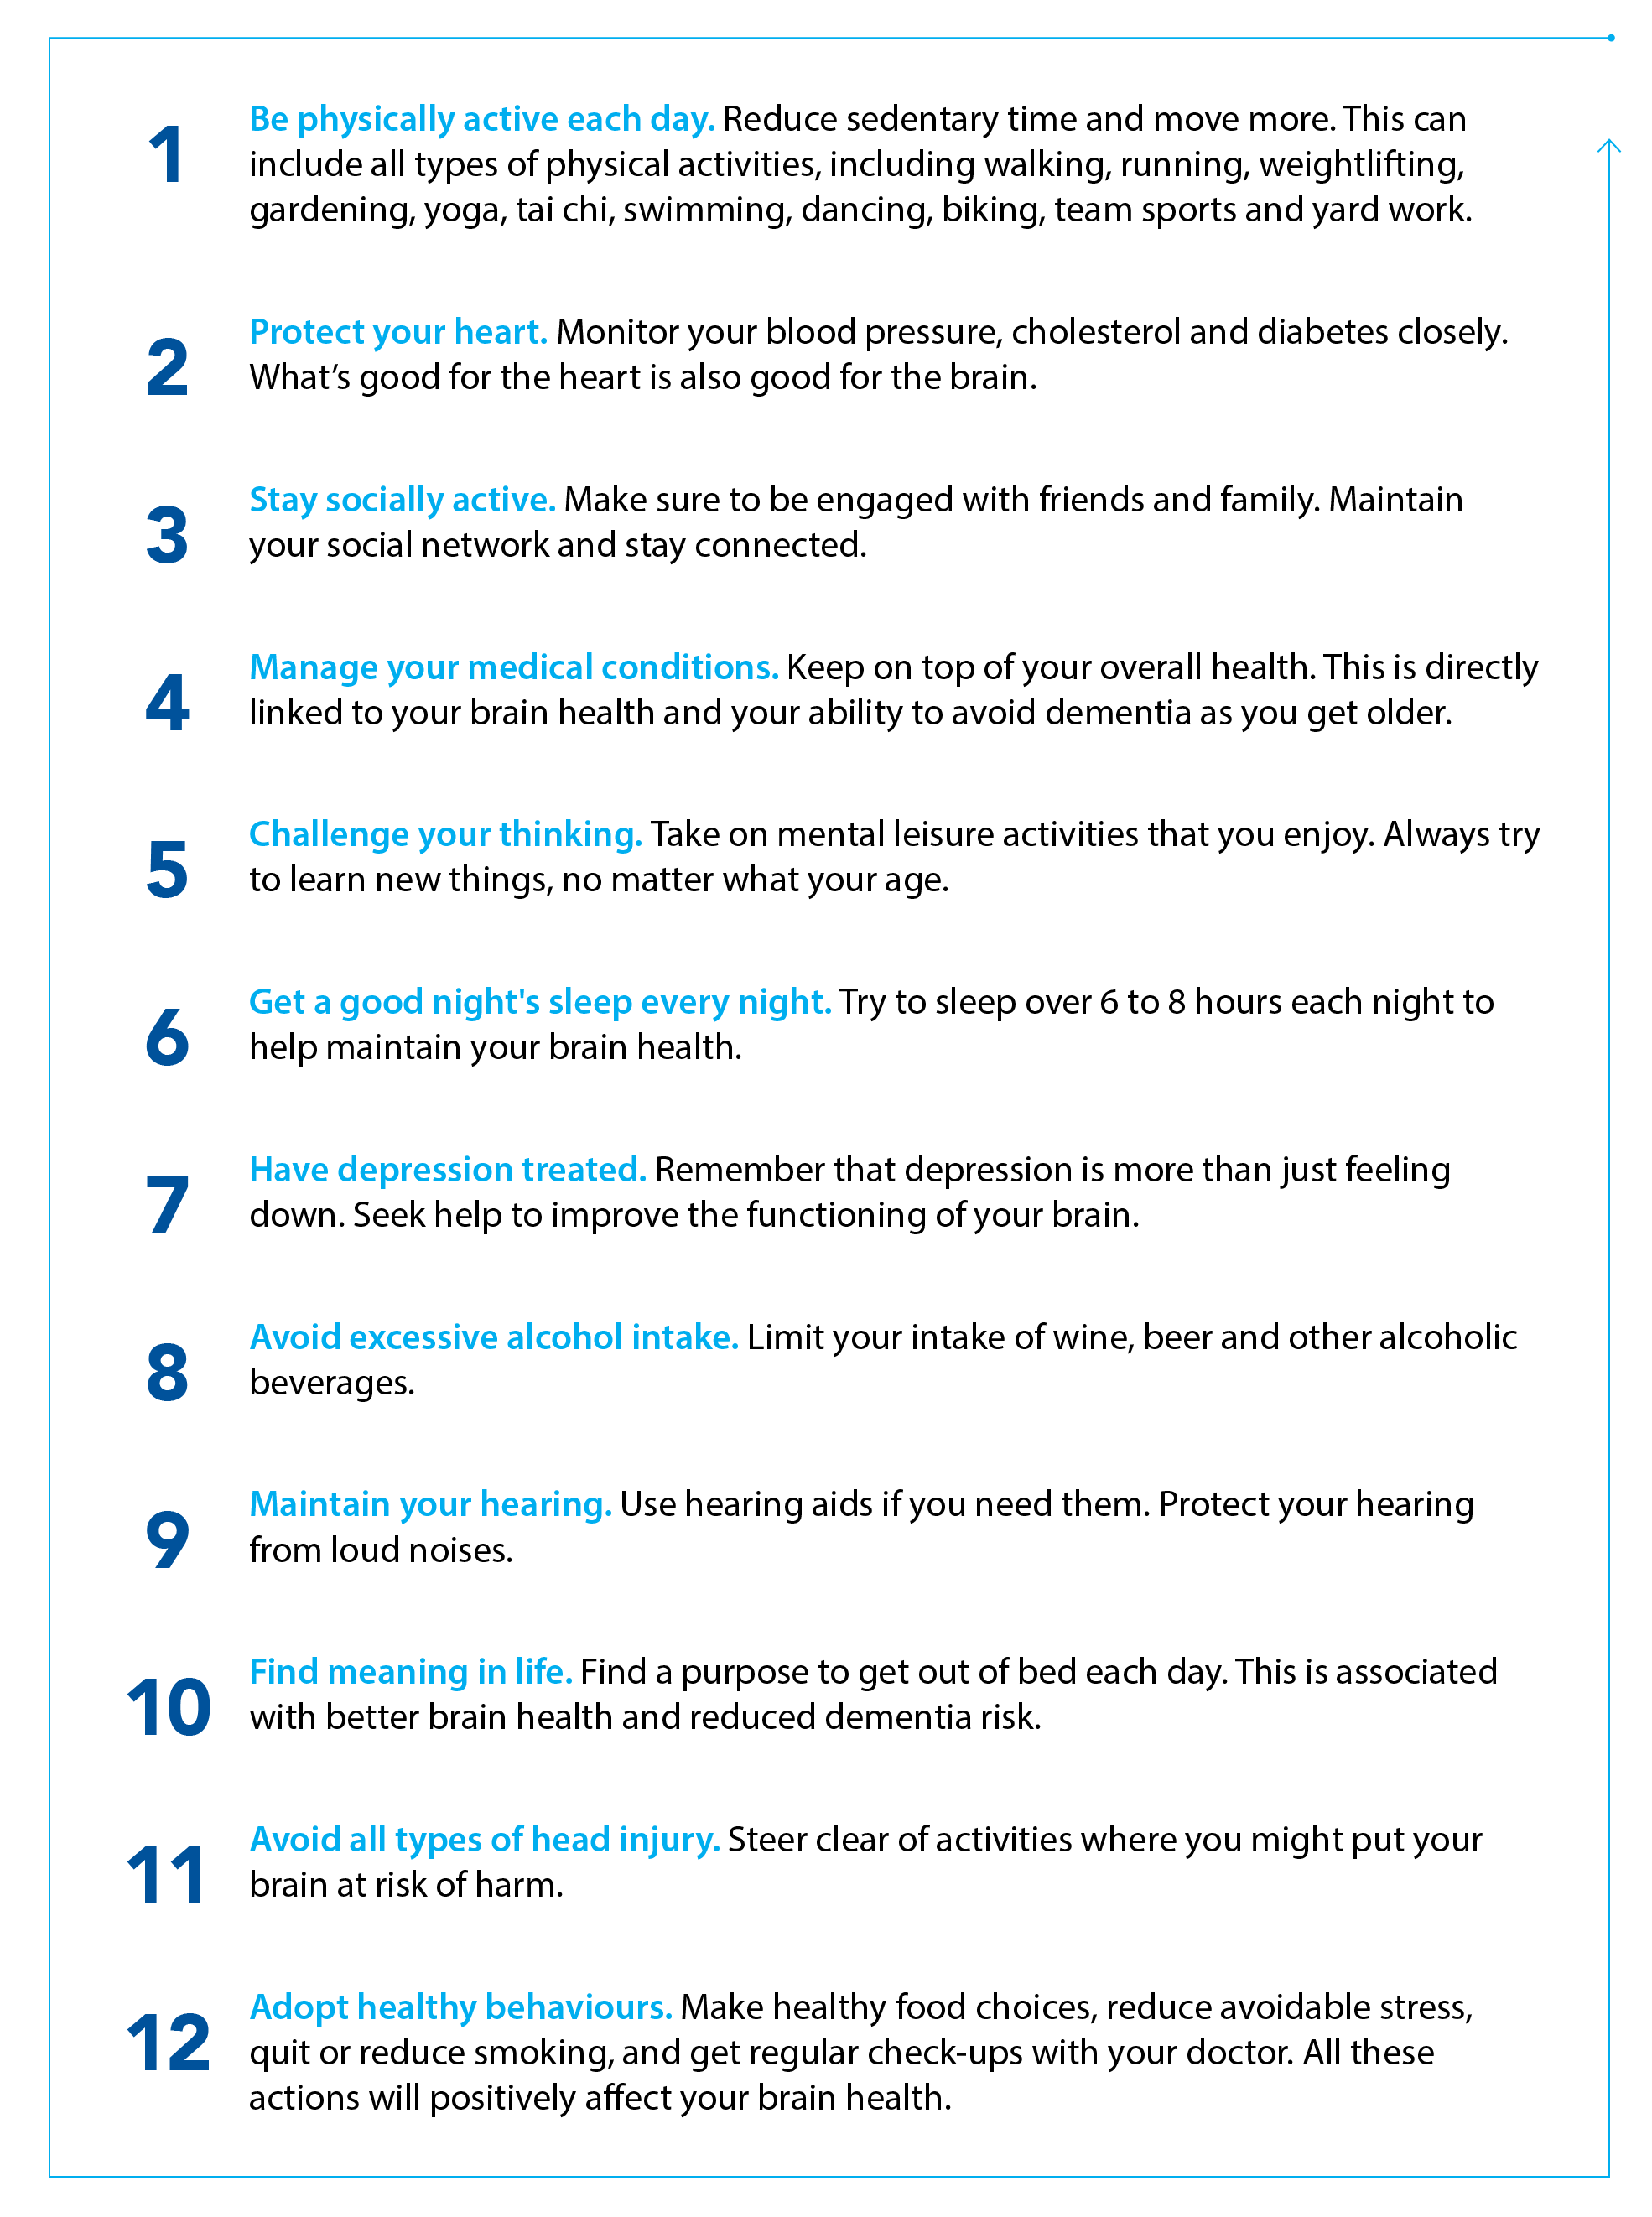 Twelve actions for a healthier brain